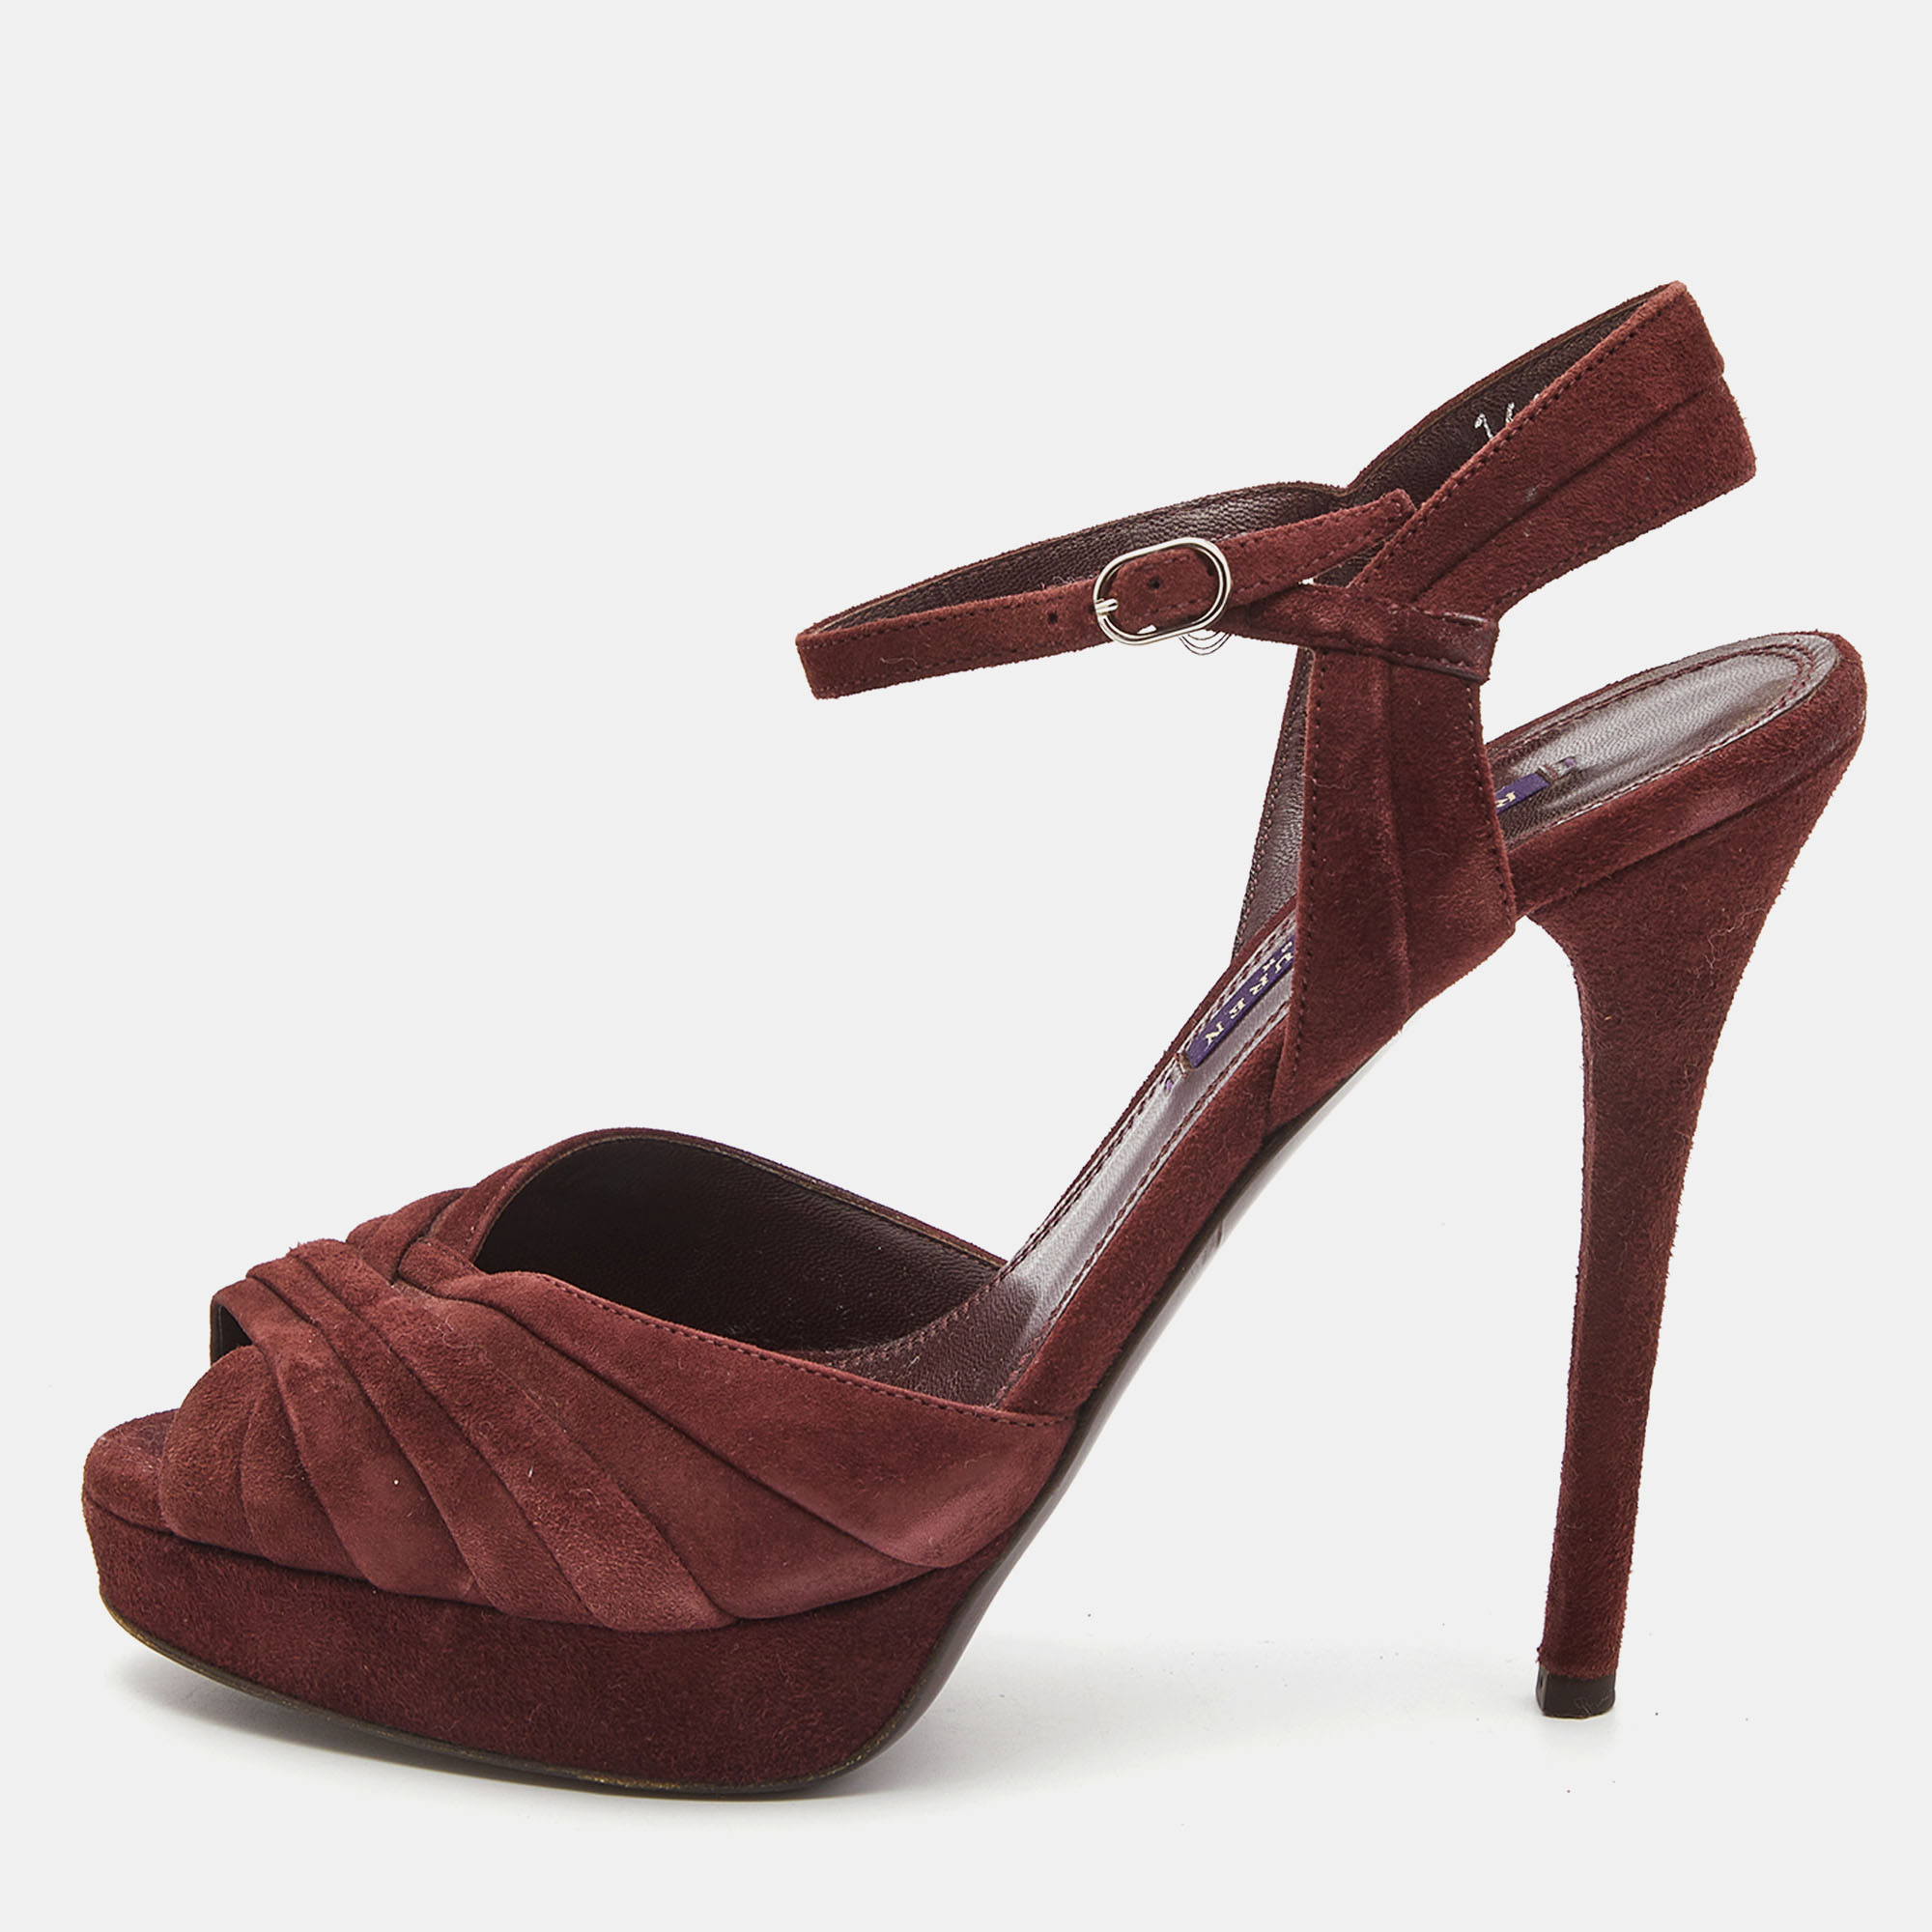 Ralph lauren collection ralph lauren burgundy suede peep toe platform ankle strap sandals size 40